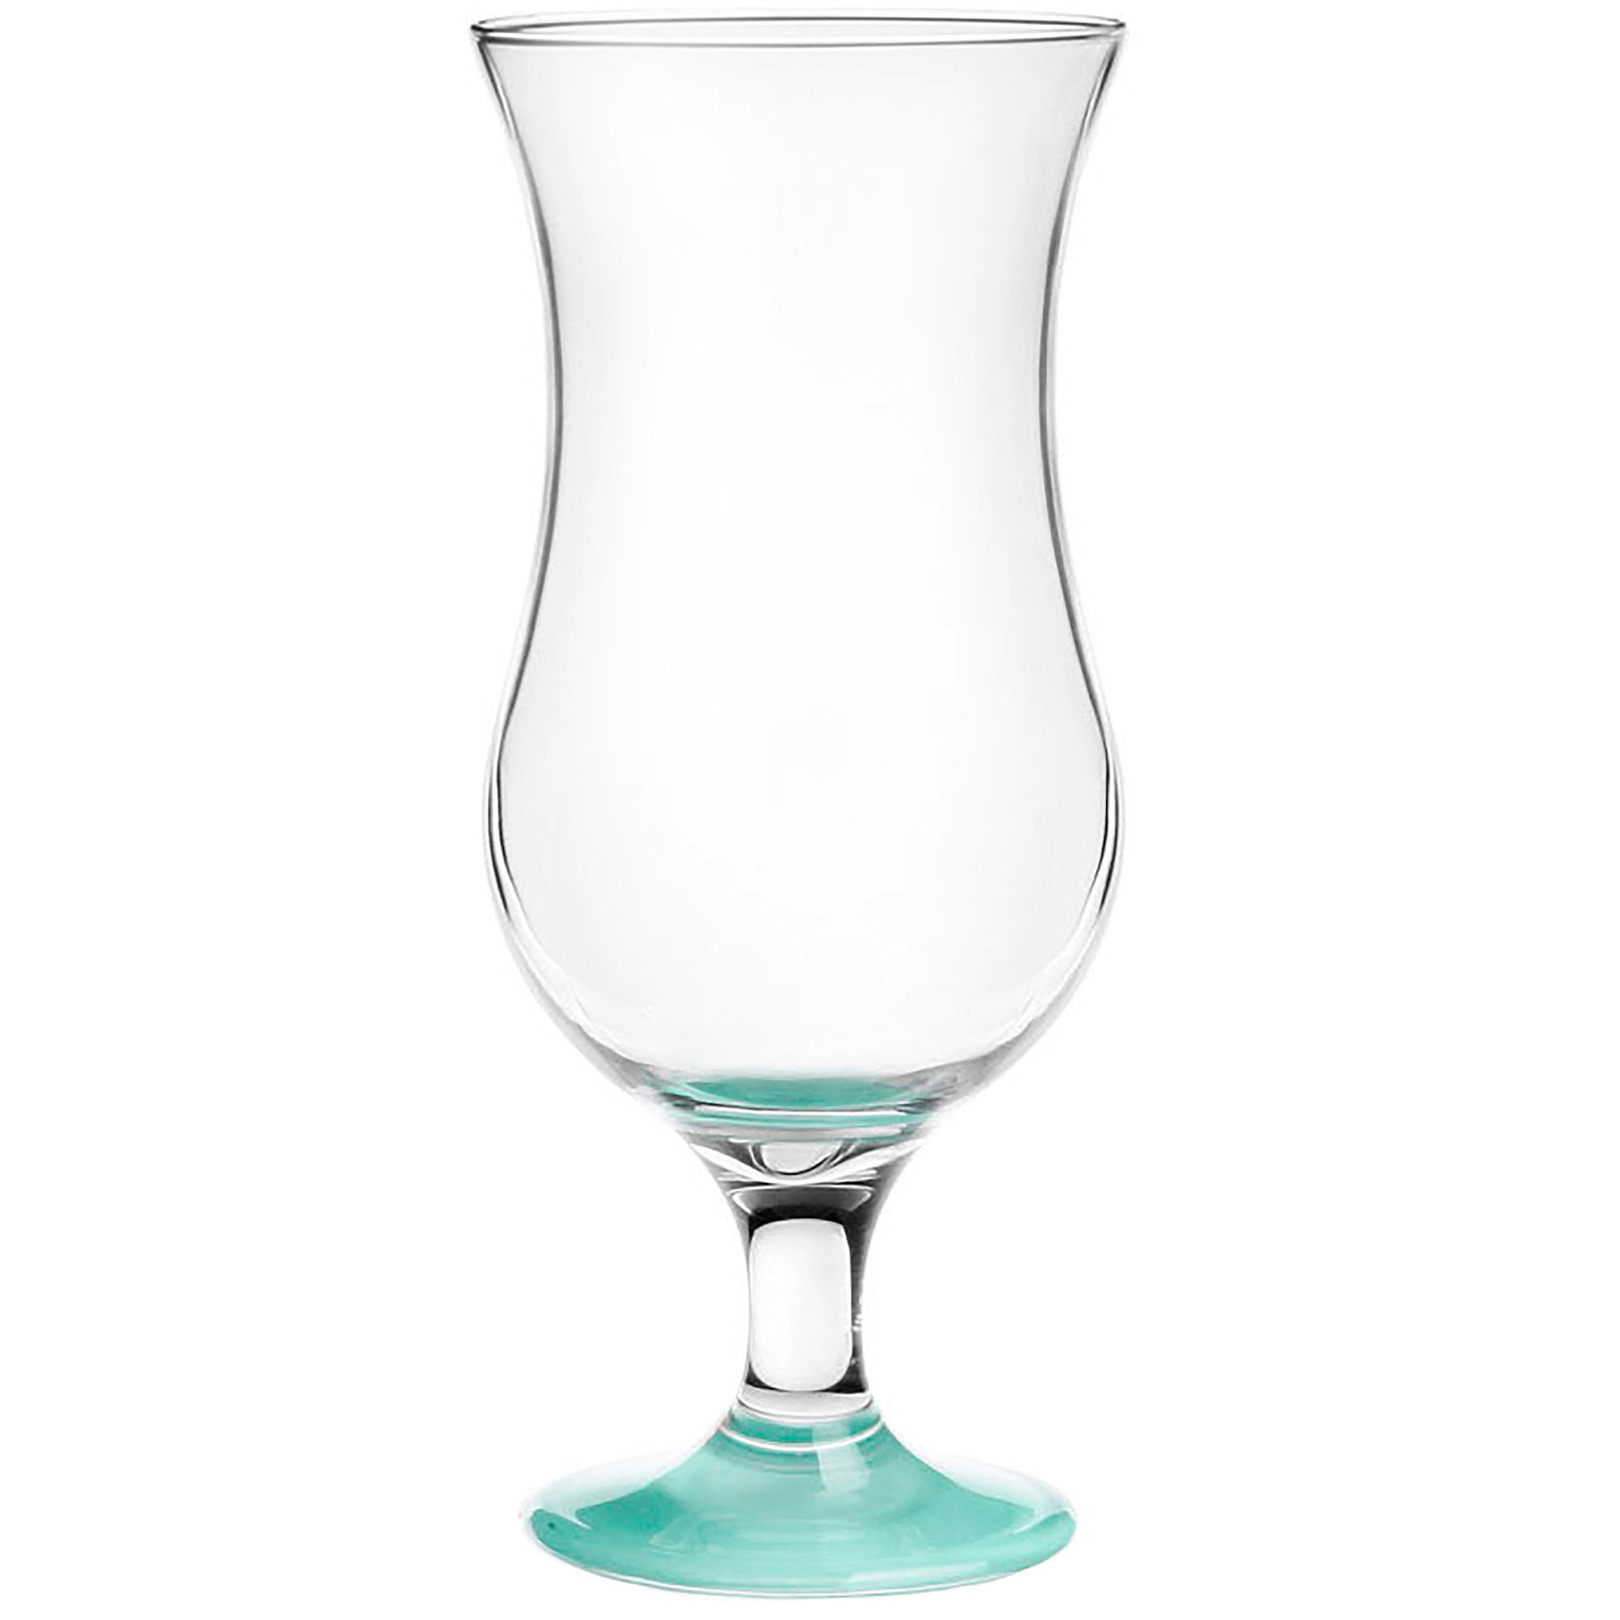 Glasmark Cocktail glazen - 6x - 420 ml - turquoise - glas - pina colada glazen -